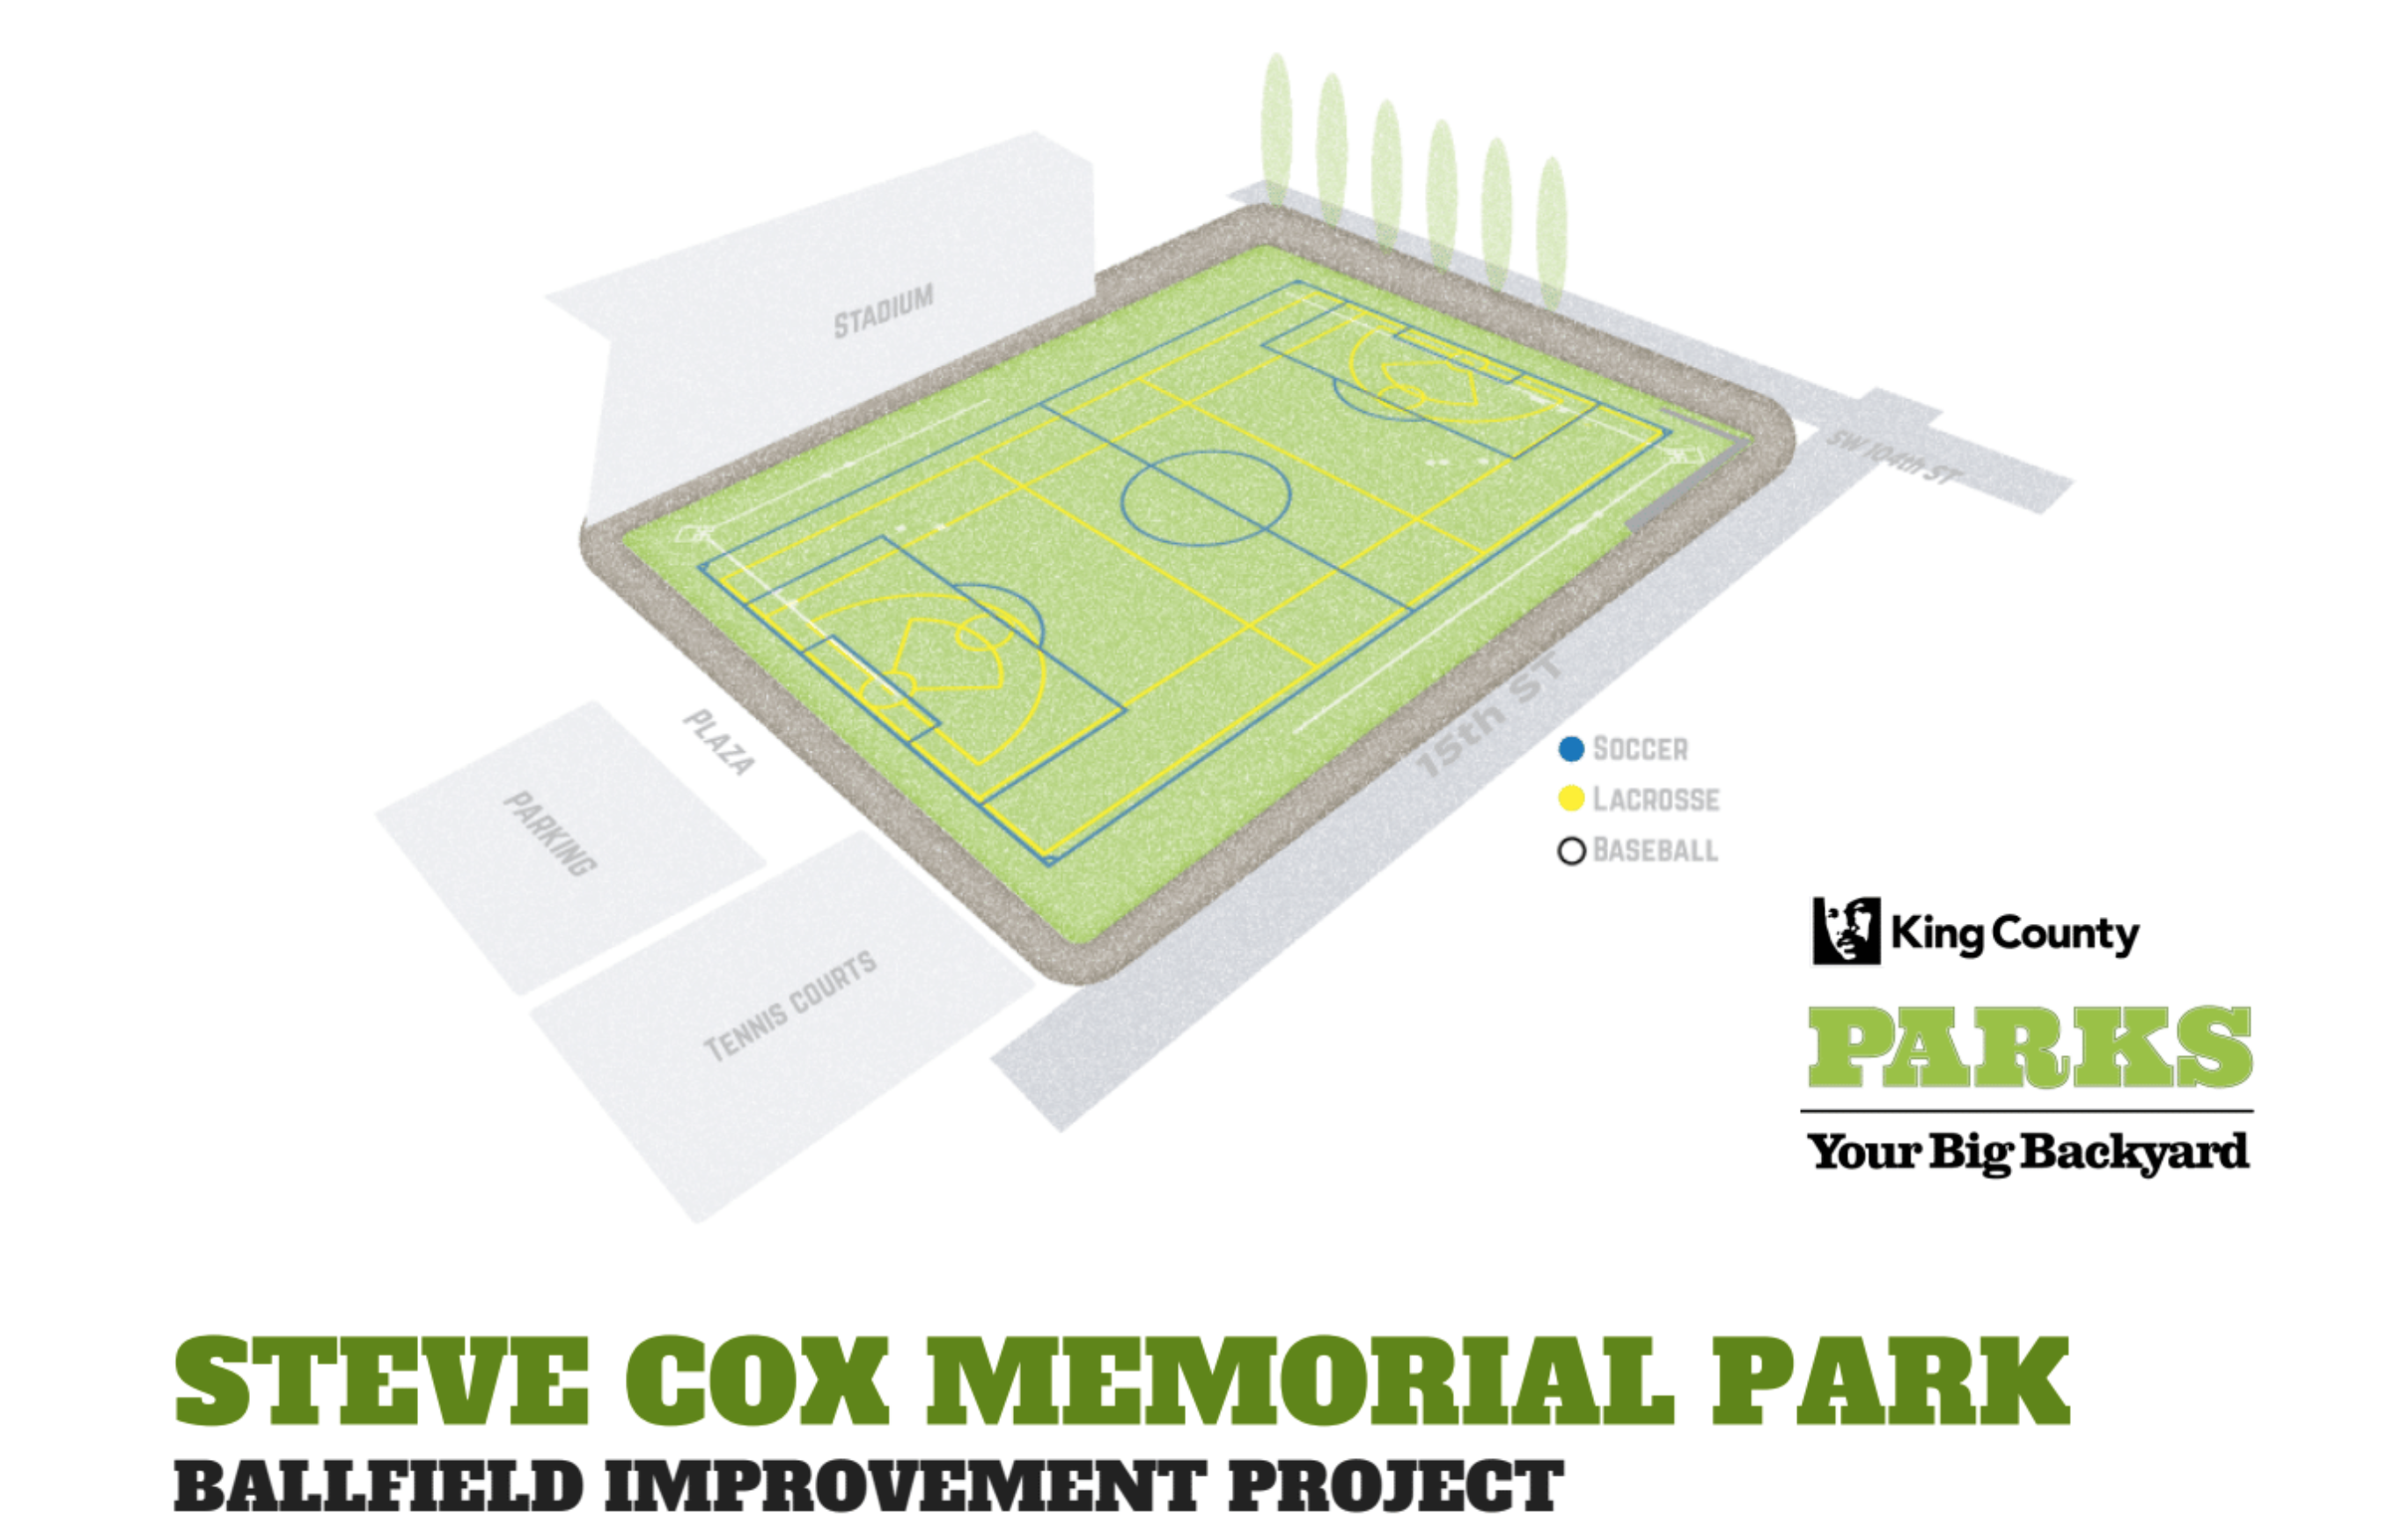 Steve Cox Memorial Park improvements